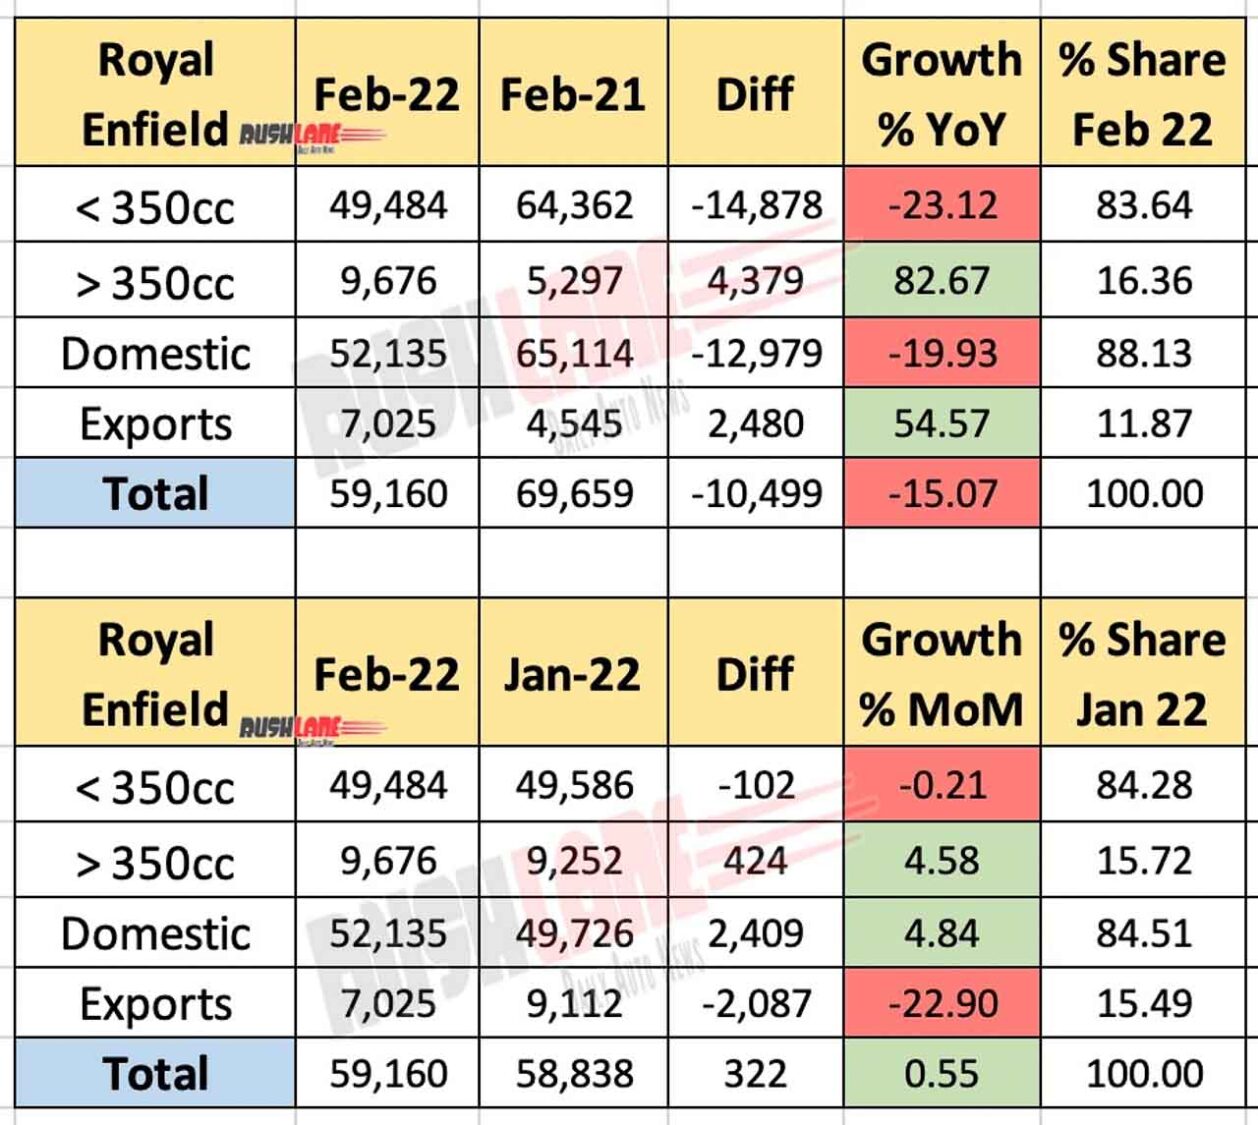 Royal Enfield Sales Feb 2022